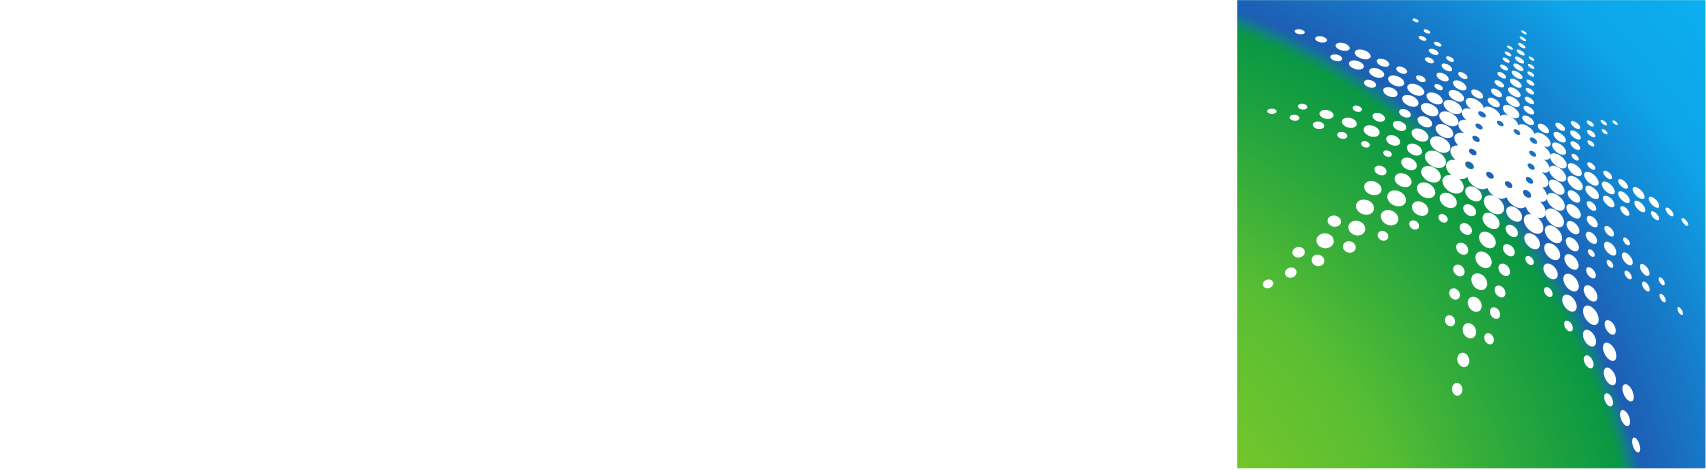 Saudi Aramco Logo Black and White – Brands Logos